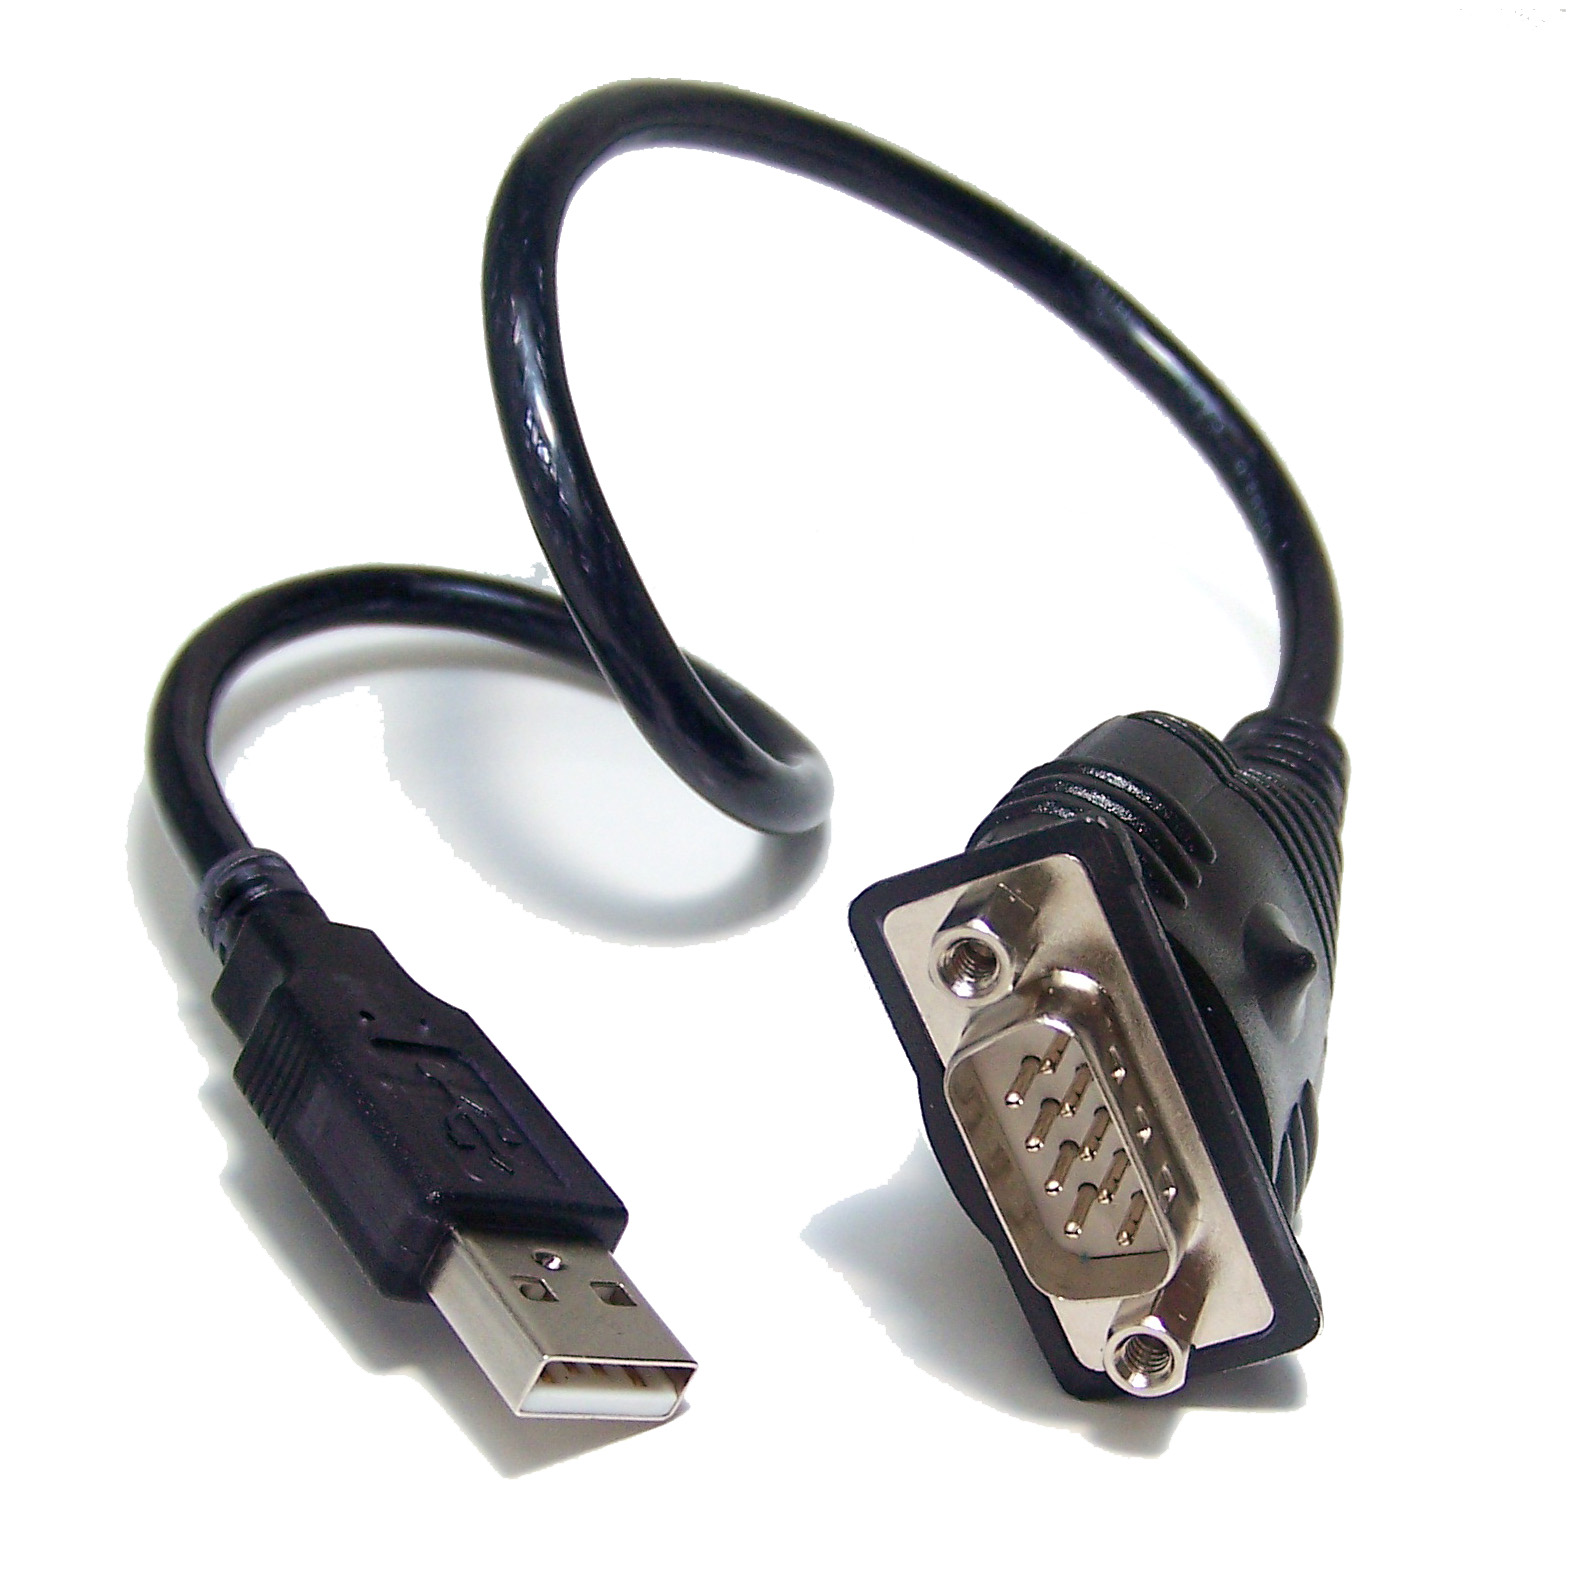 E07-160 USB A To DB9 Serial Converter